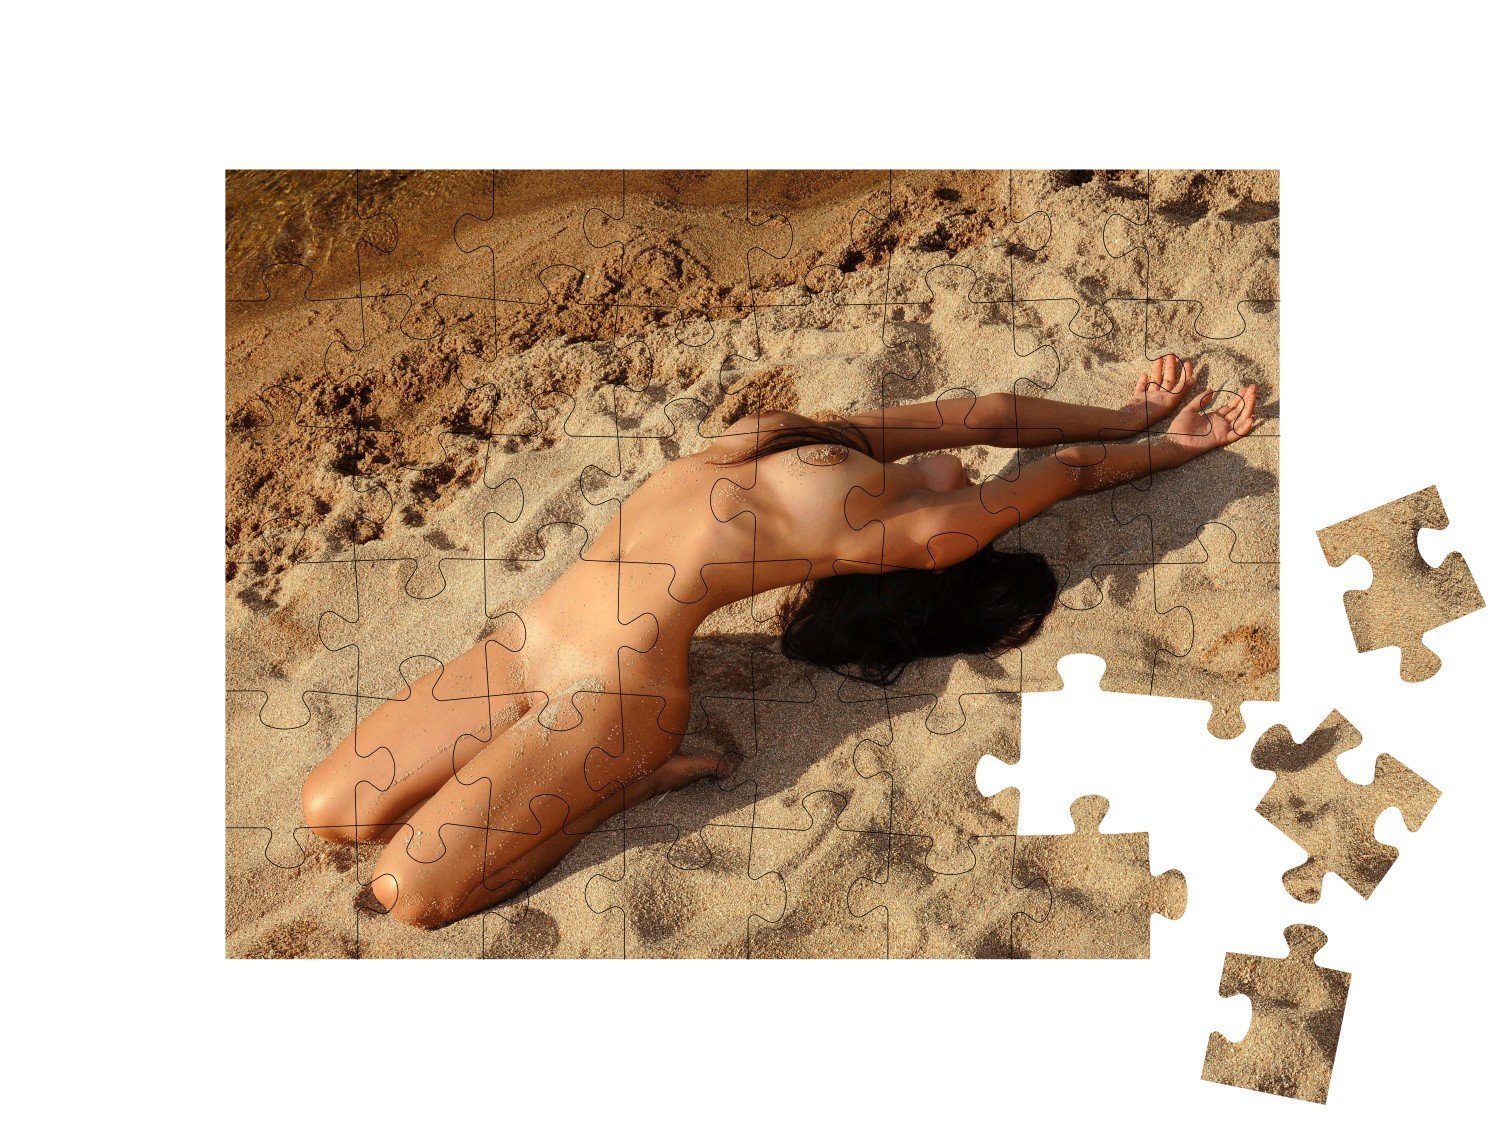 Fotografie: am Erotische Nackte puzzleYOU-Kollektionen Sandstrand, Puzzle puzzleYOU Erotik 48 Frau Puzzleteile,